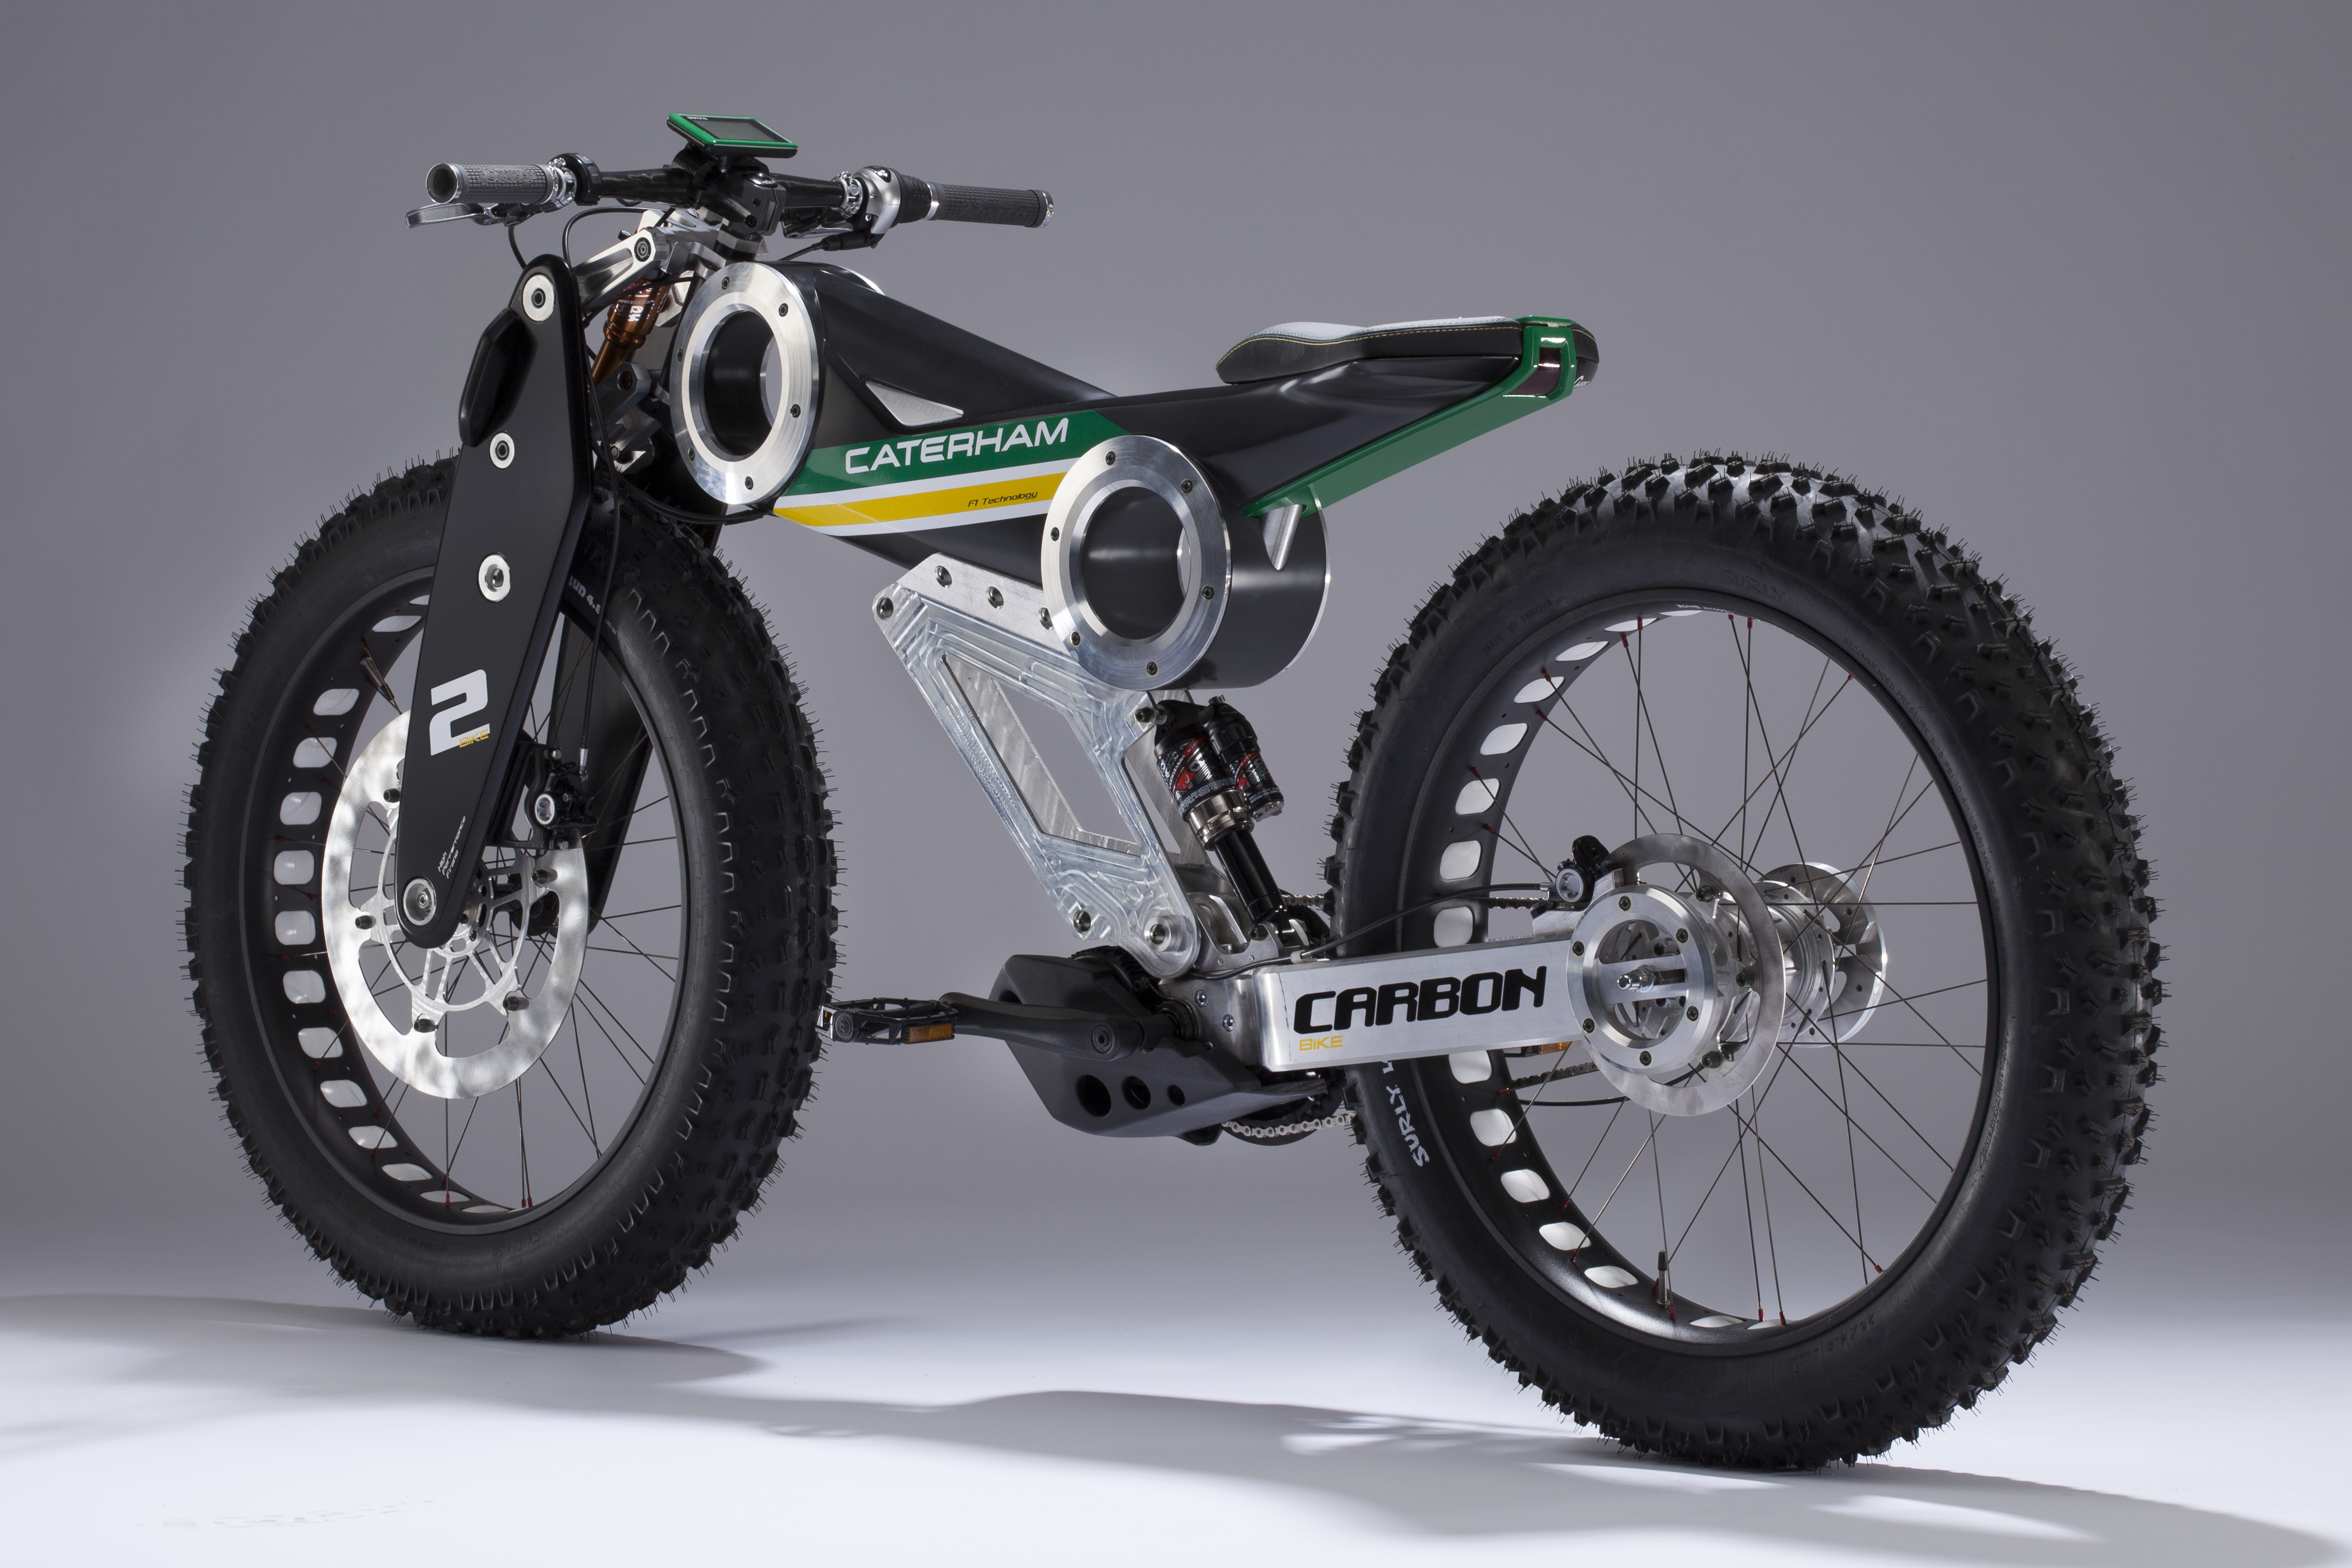 Www bike. Электровелосипед фэт-байк, чоппер. Moto parilla Carbon велосипед. Электровелосипед фэтбайк 750w Supercross. Фэтбайк карбон.